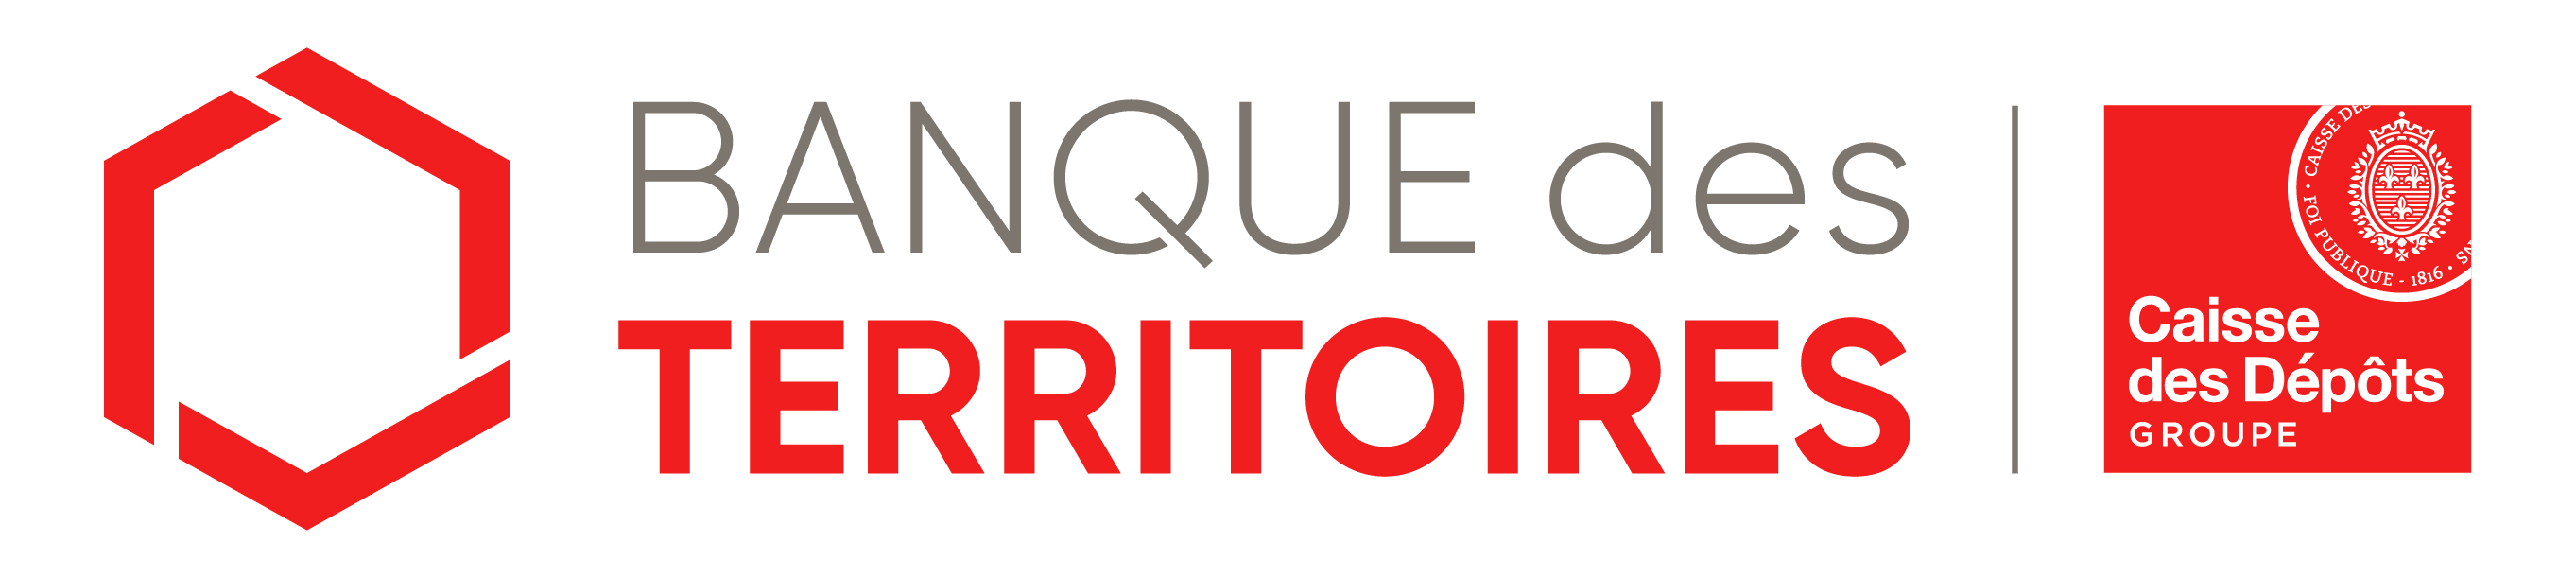 Logo exposant BANQUE DES TERRITOIRES